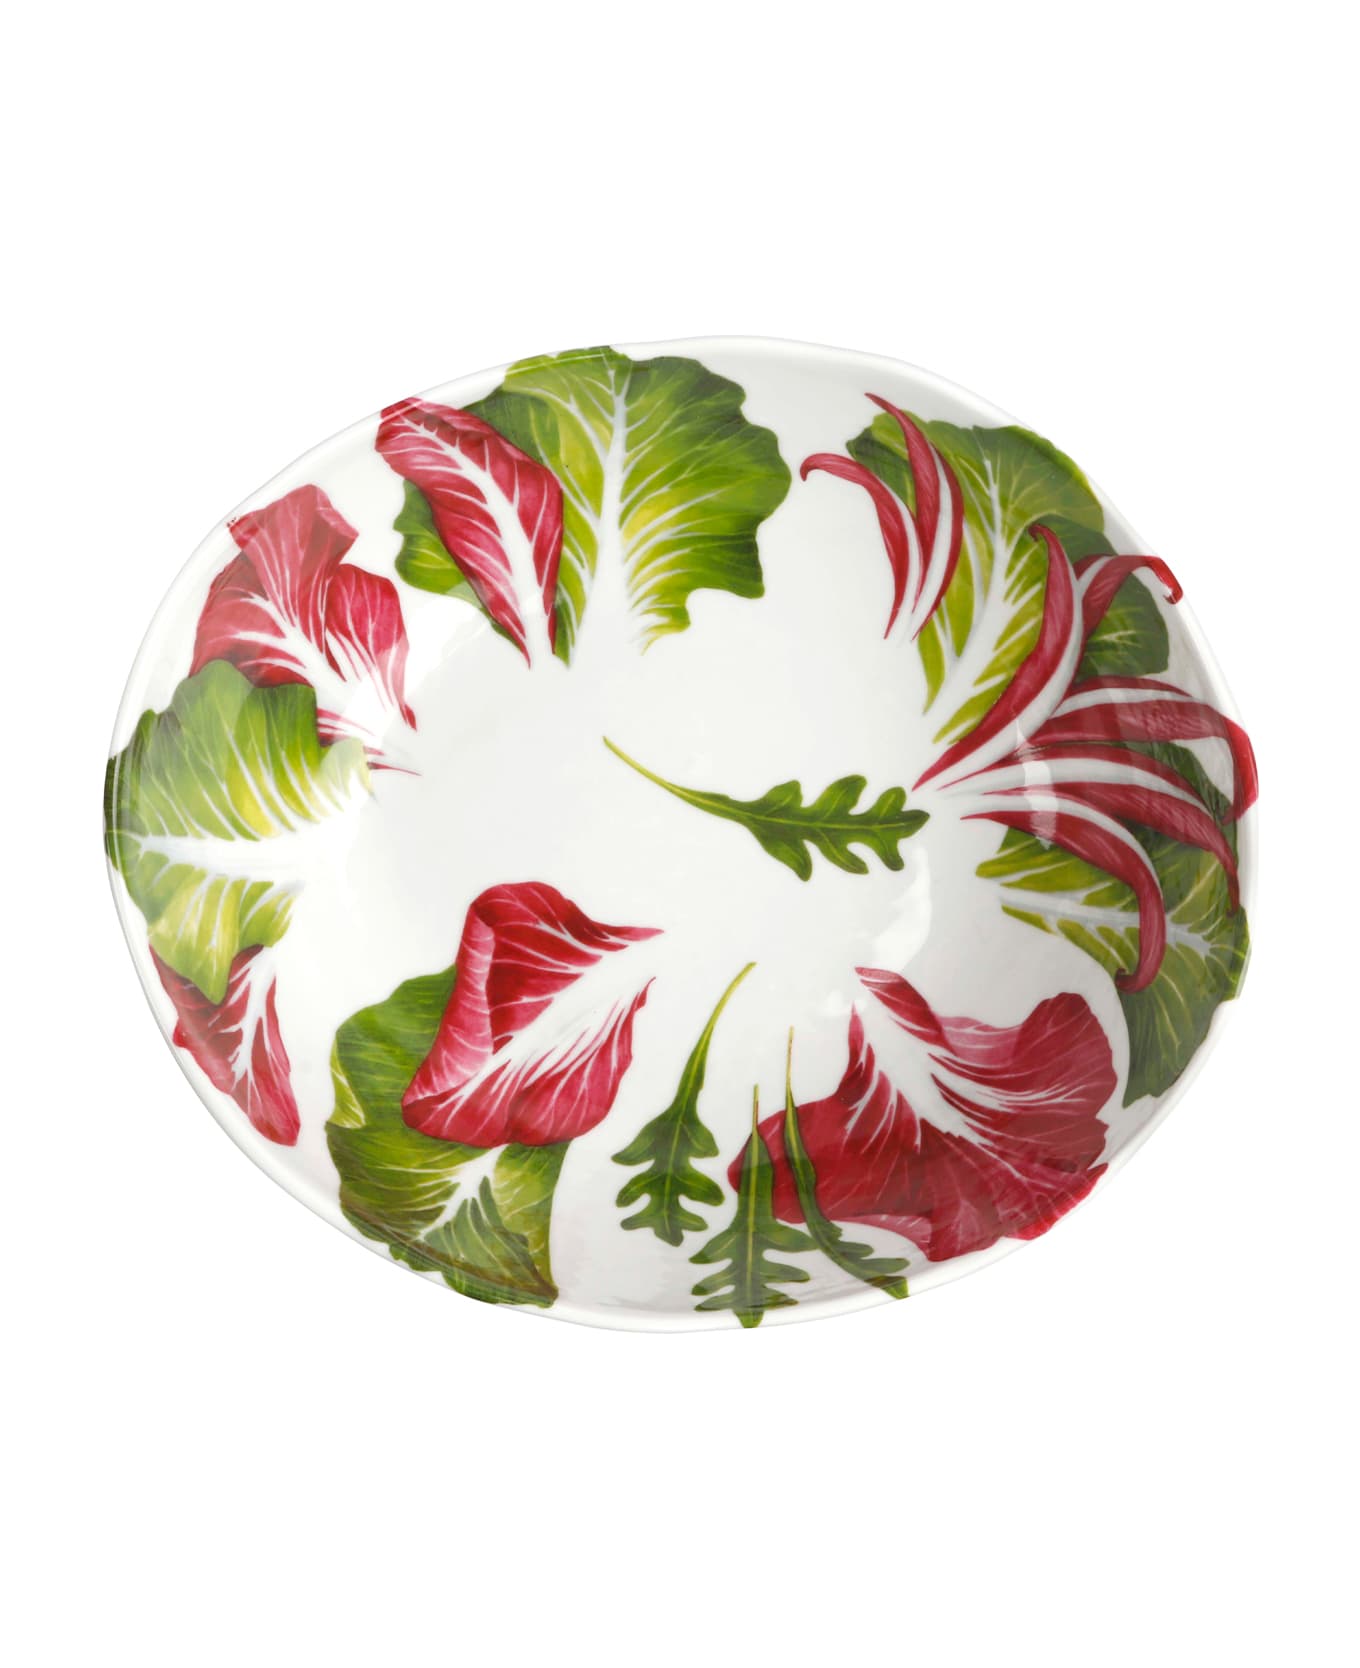 Taitù Large Oval Bowl INSALATE - Dieta Mediterranea Vegetables Collection - Multicolor